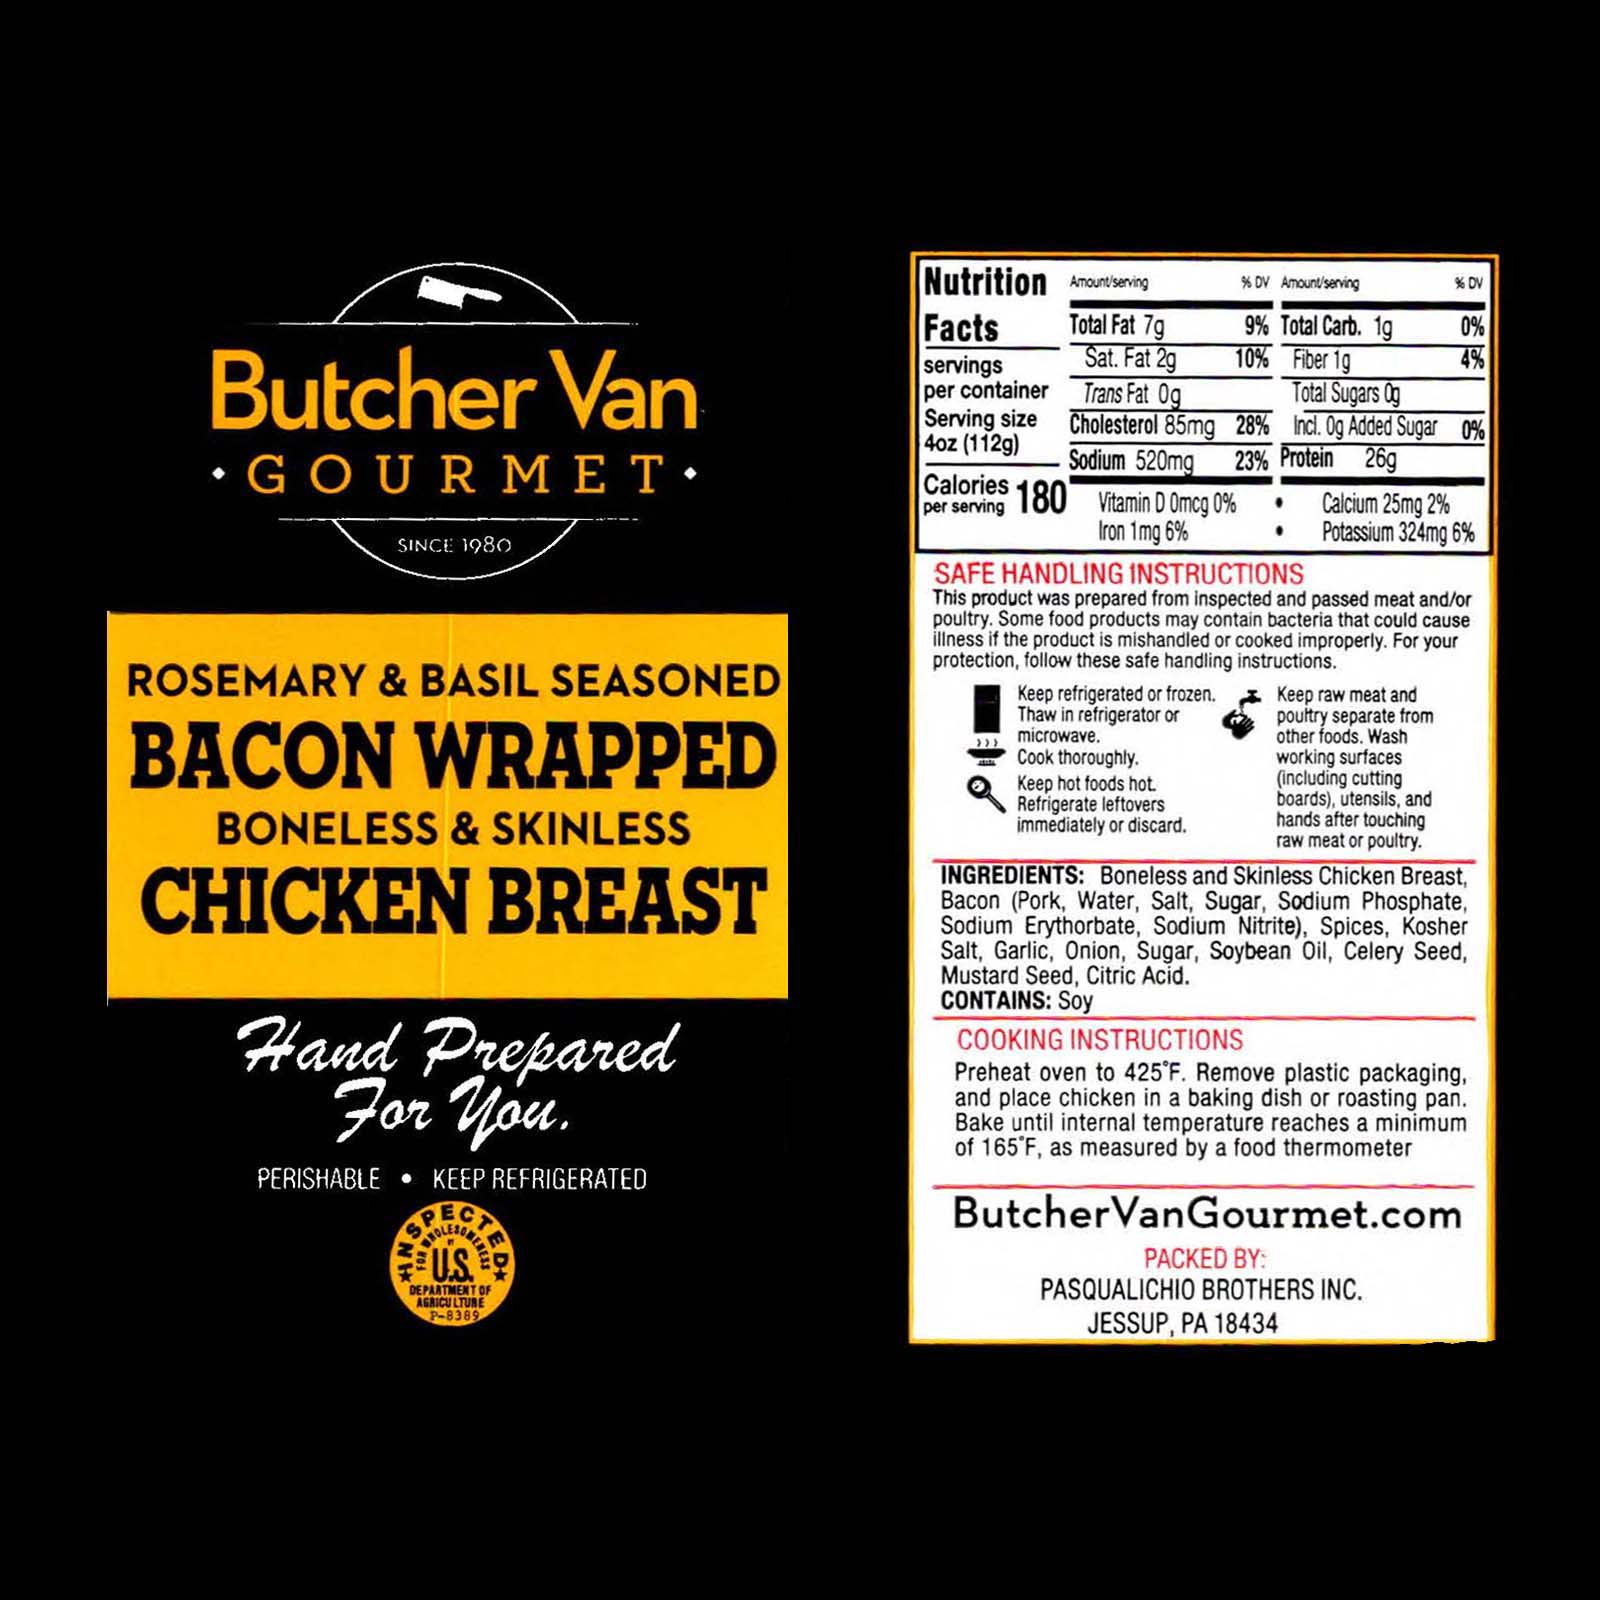 Rosemary & Basil Seasoned Bacon Wrapped Chicken Breast Label